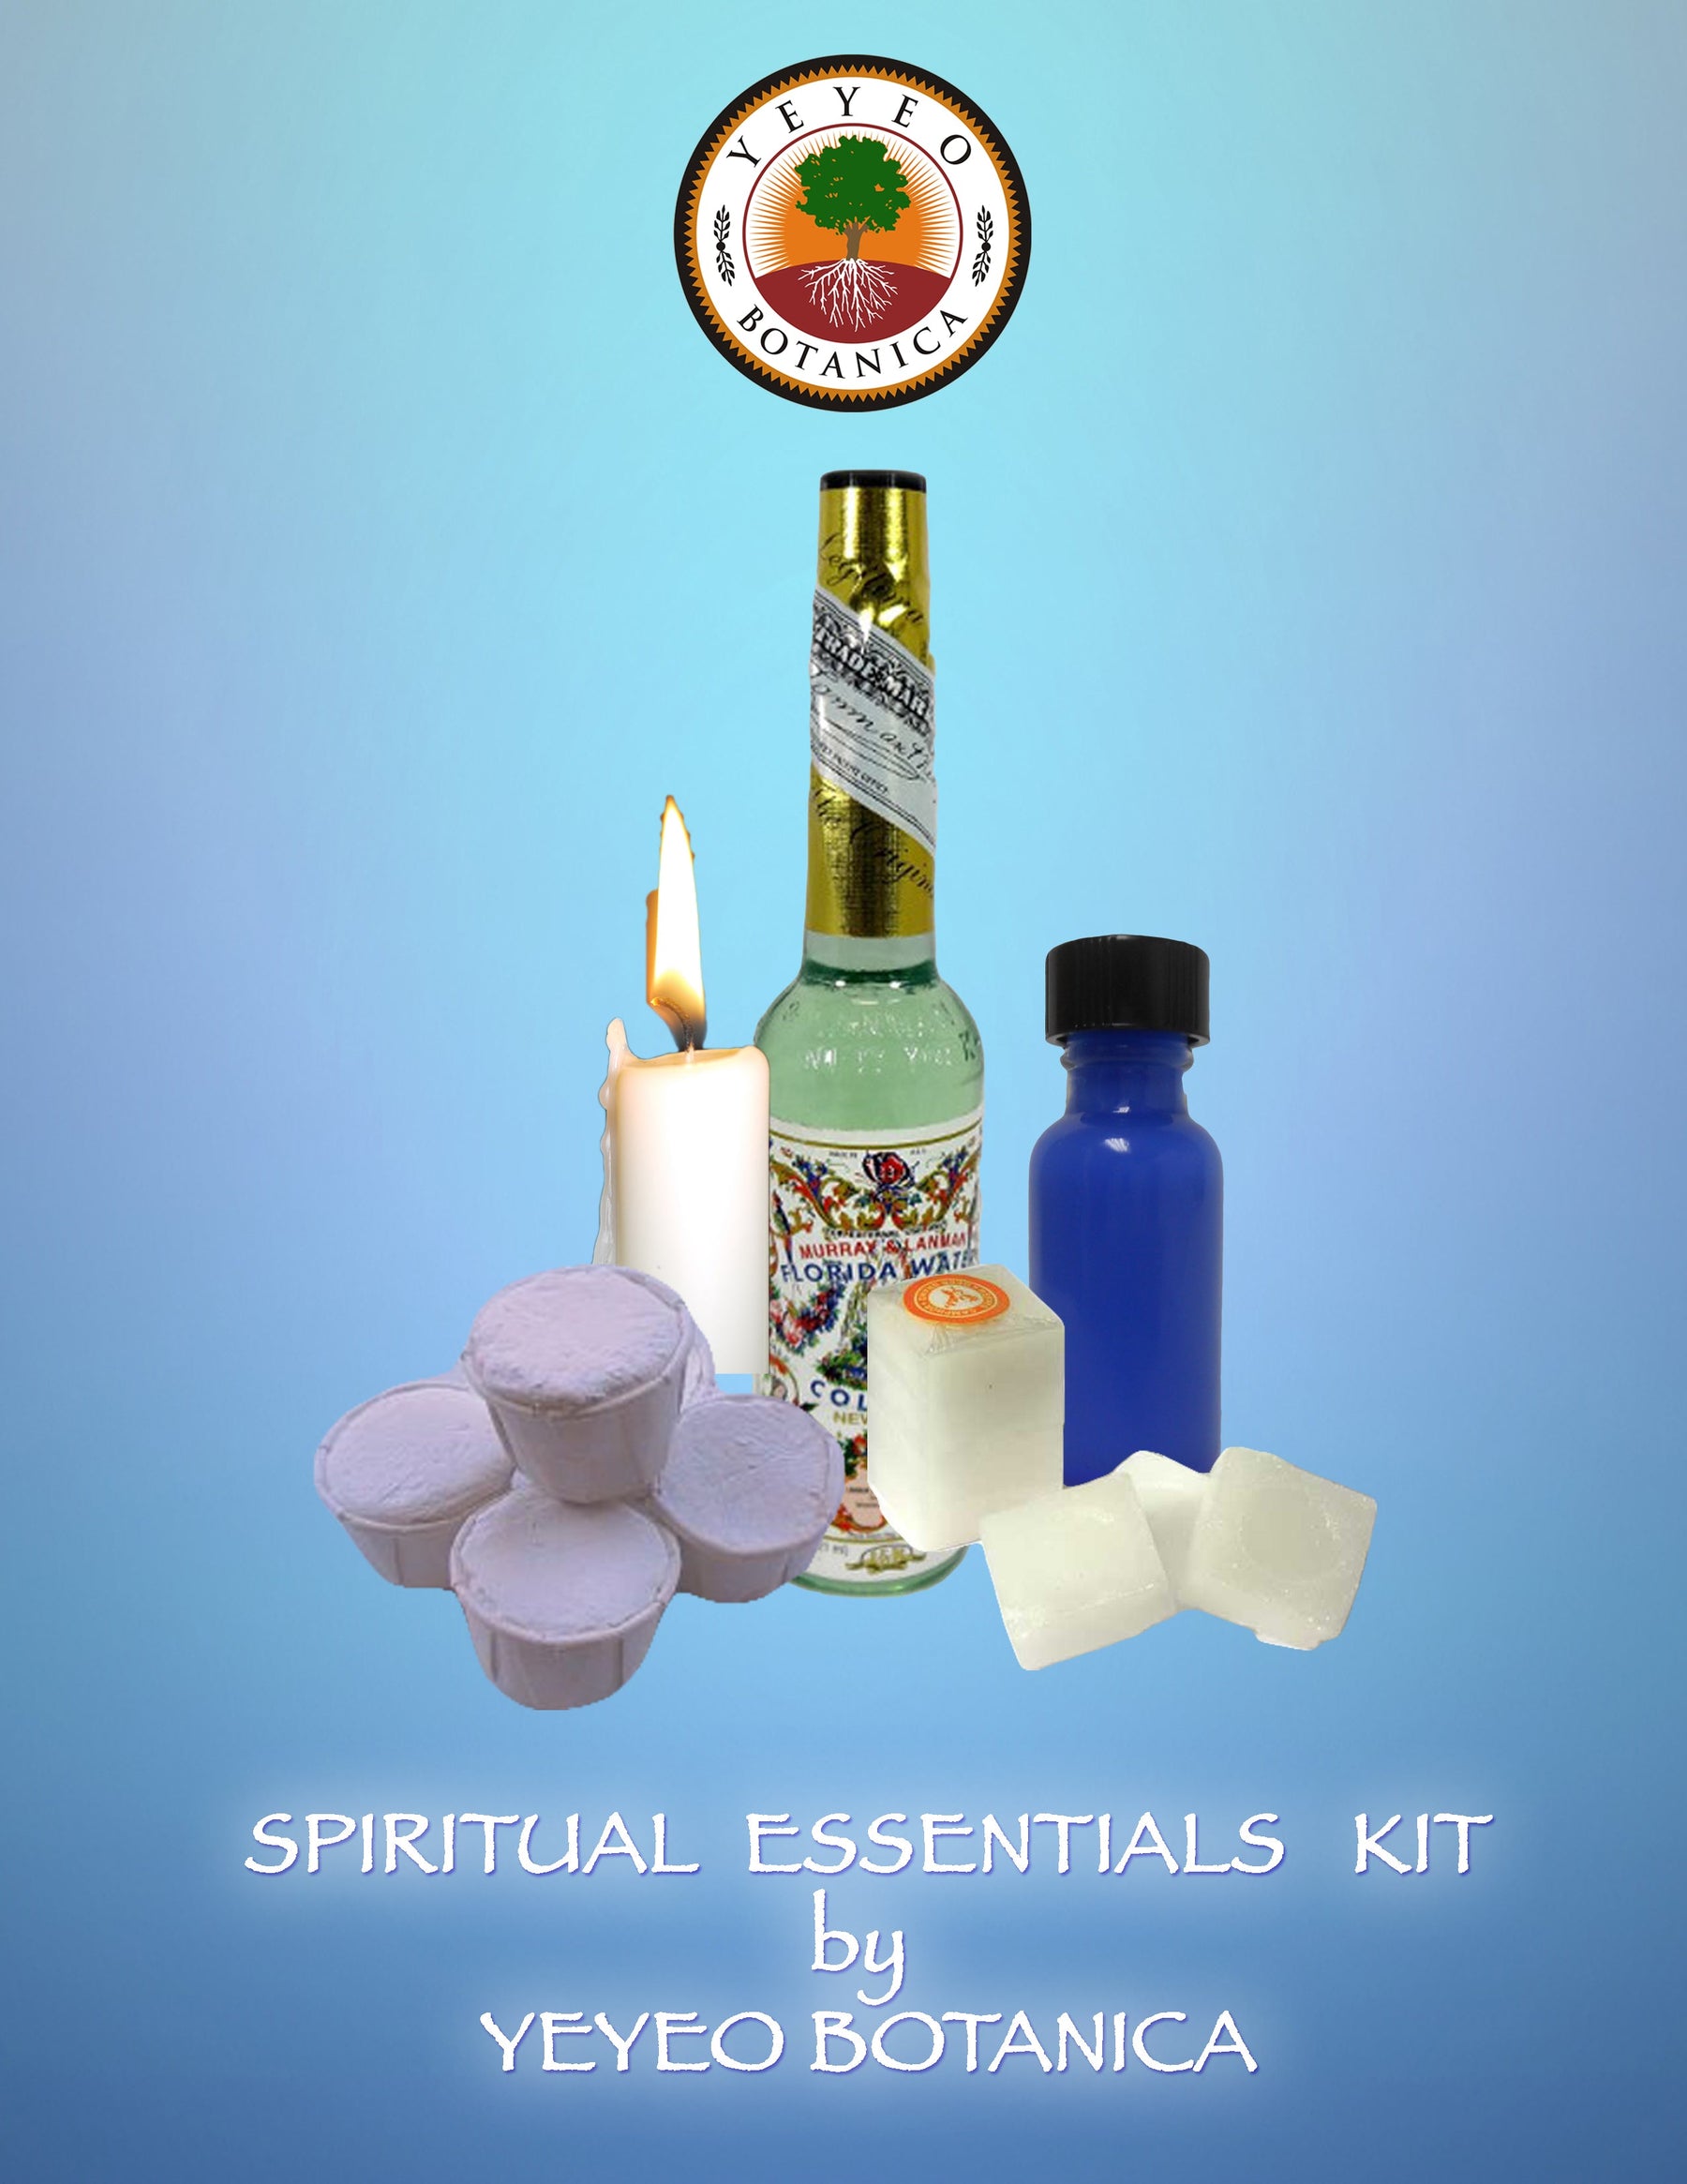 Spiritual Essentials 101-Florida Water, Cascarilla, Anil & Camphor-Spiritual Essential Tools you MUST Have!